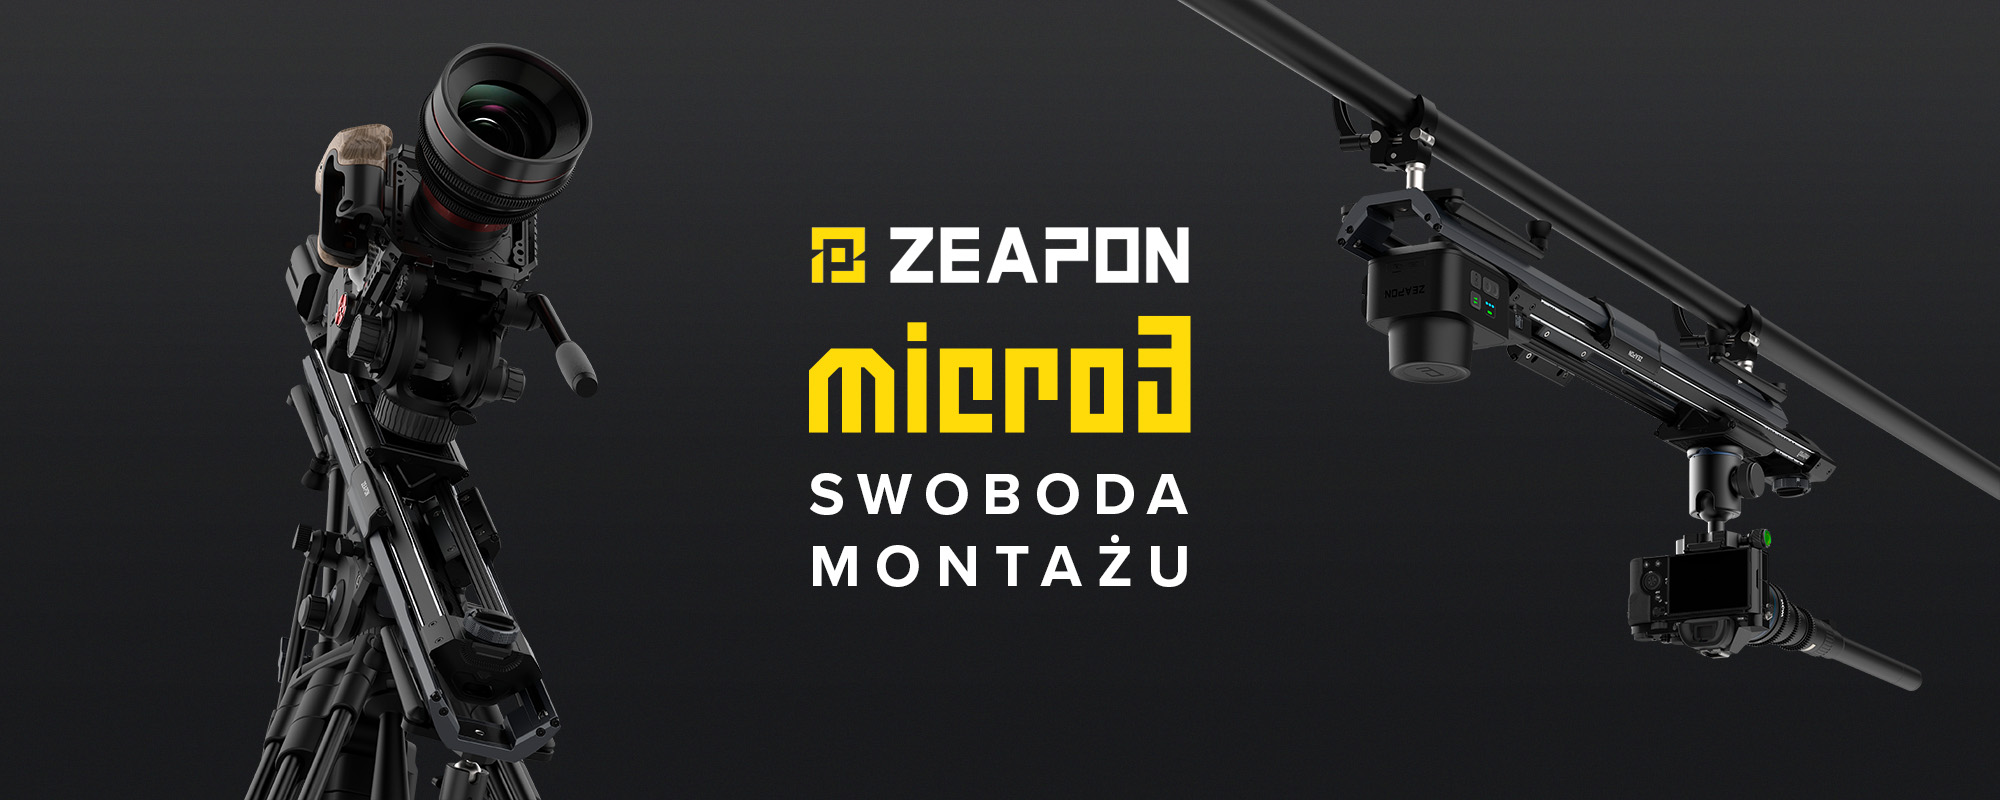 Slider Zeapon Micro 3 M500 - Nowe sposoby pracy